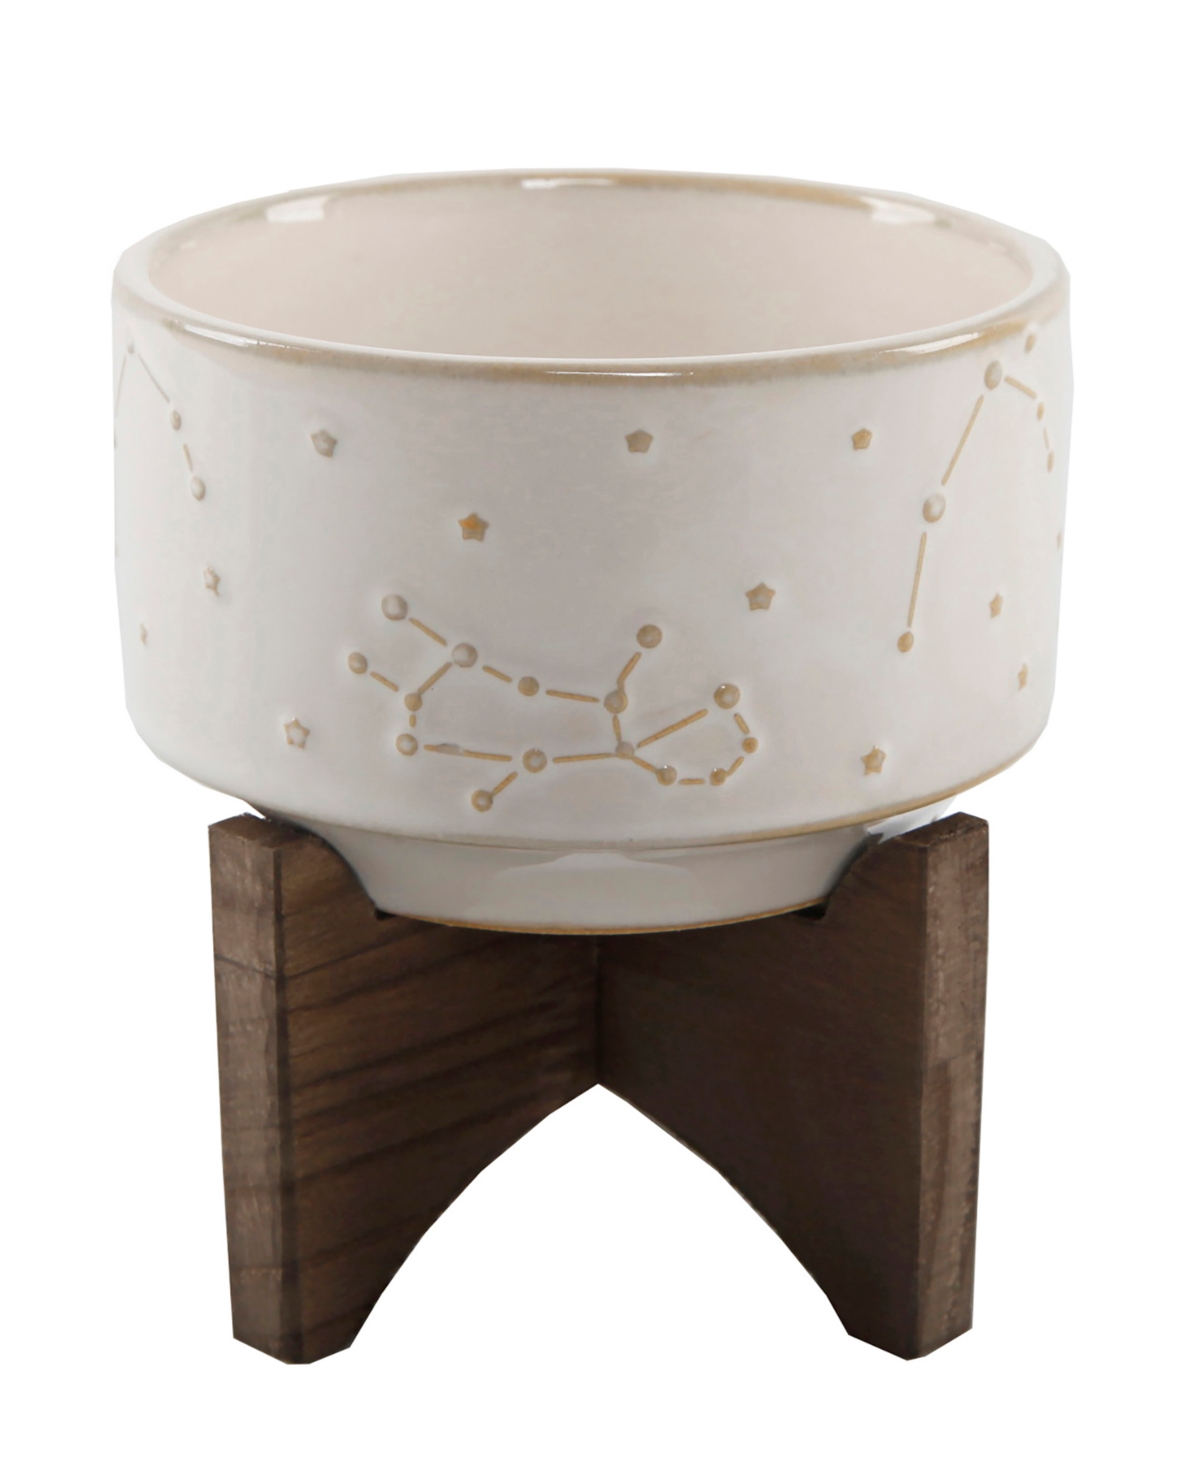 Constellation Ceramic Planter Pot on Wood Stand, 4.25" - Ivory